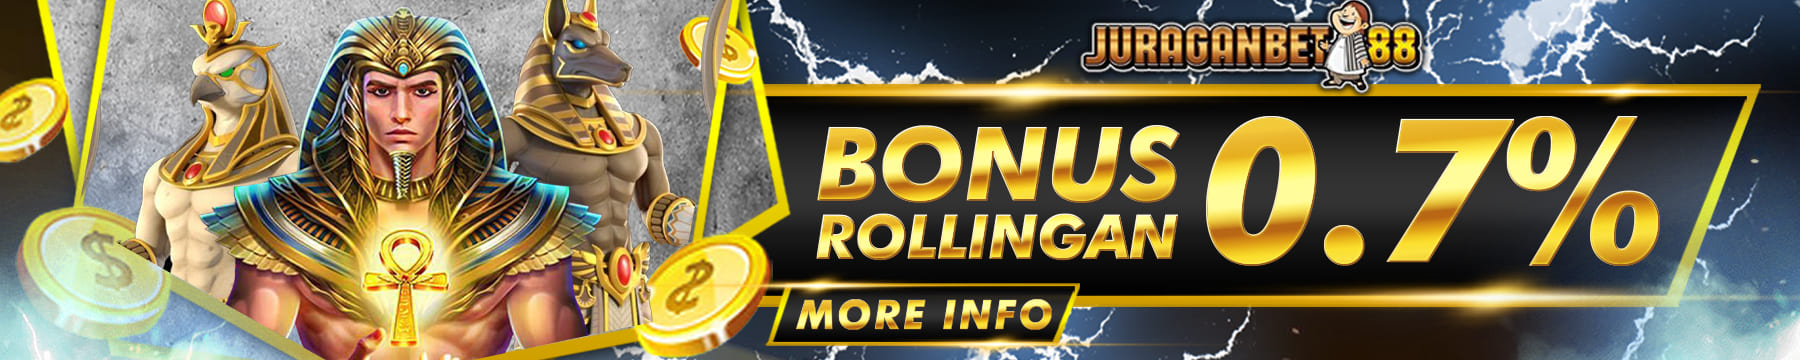 Bonus Rollingan 0.7%